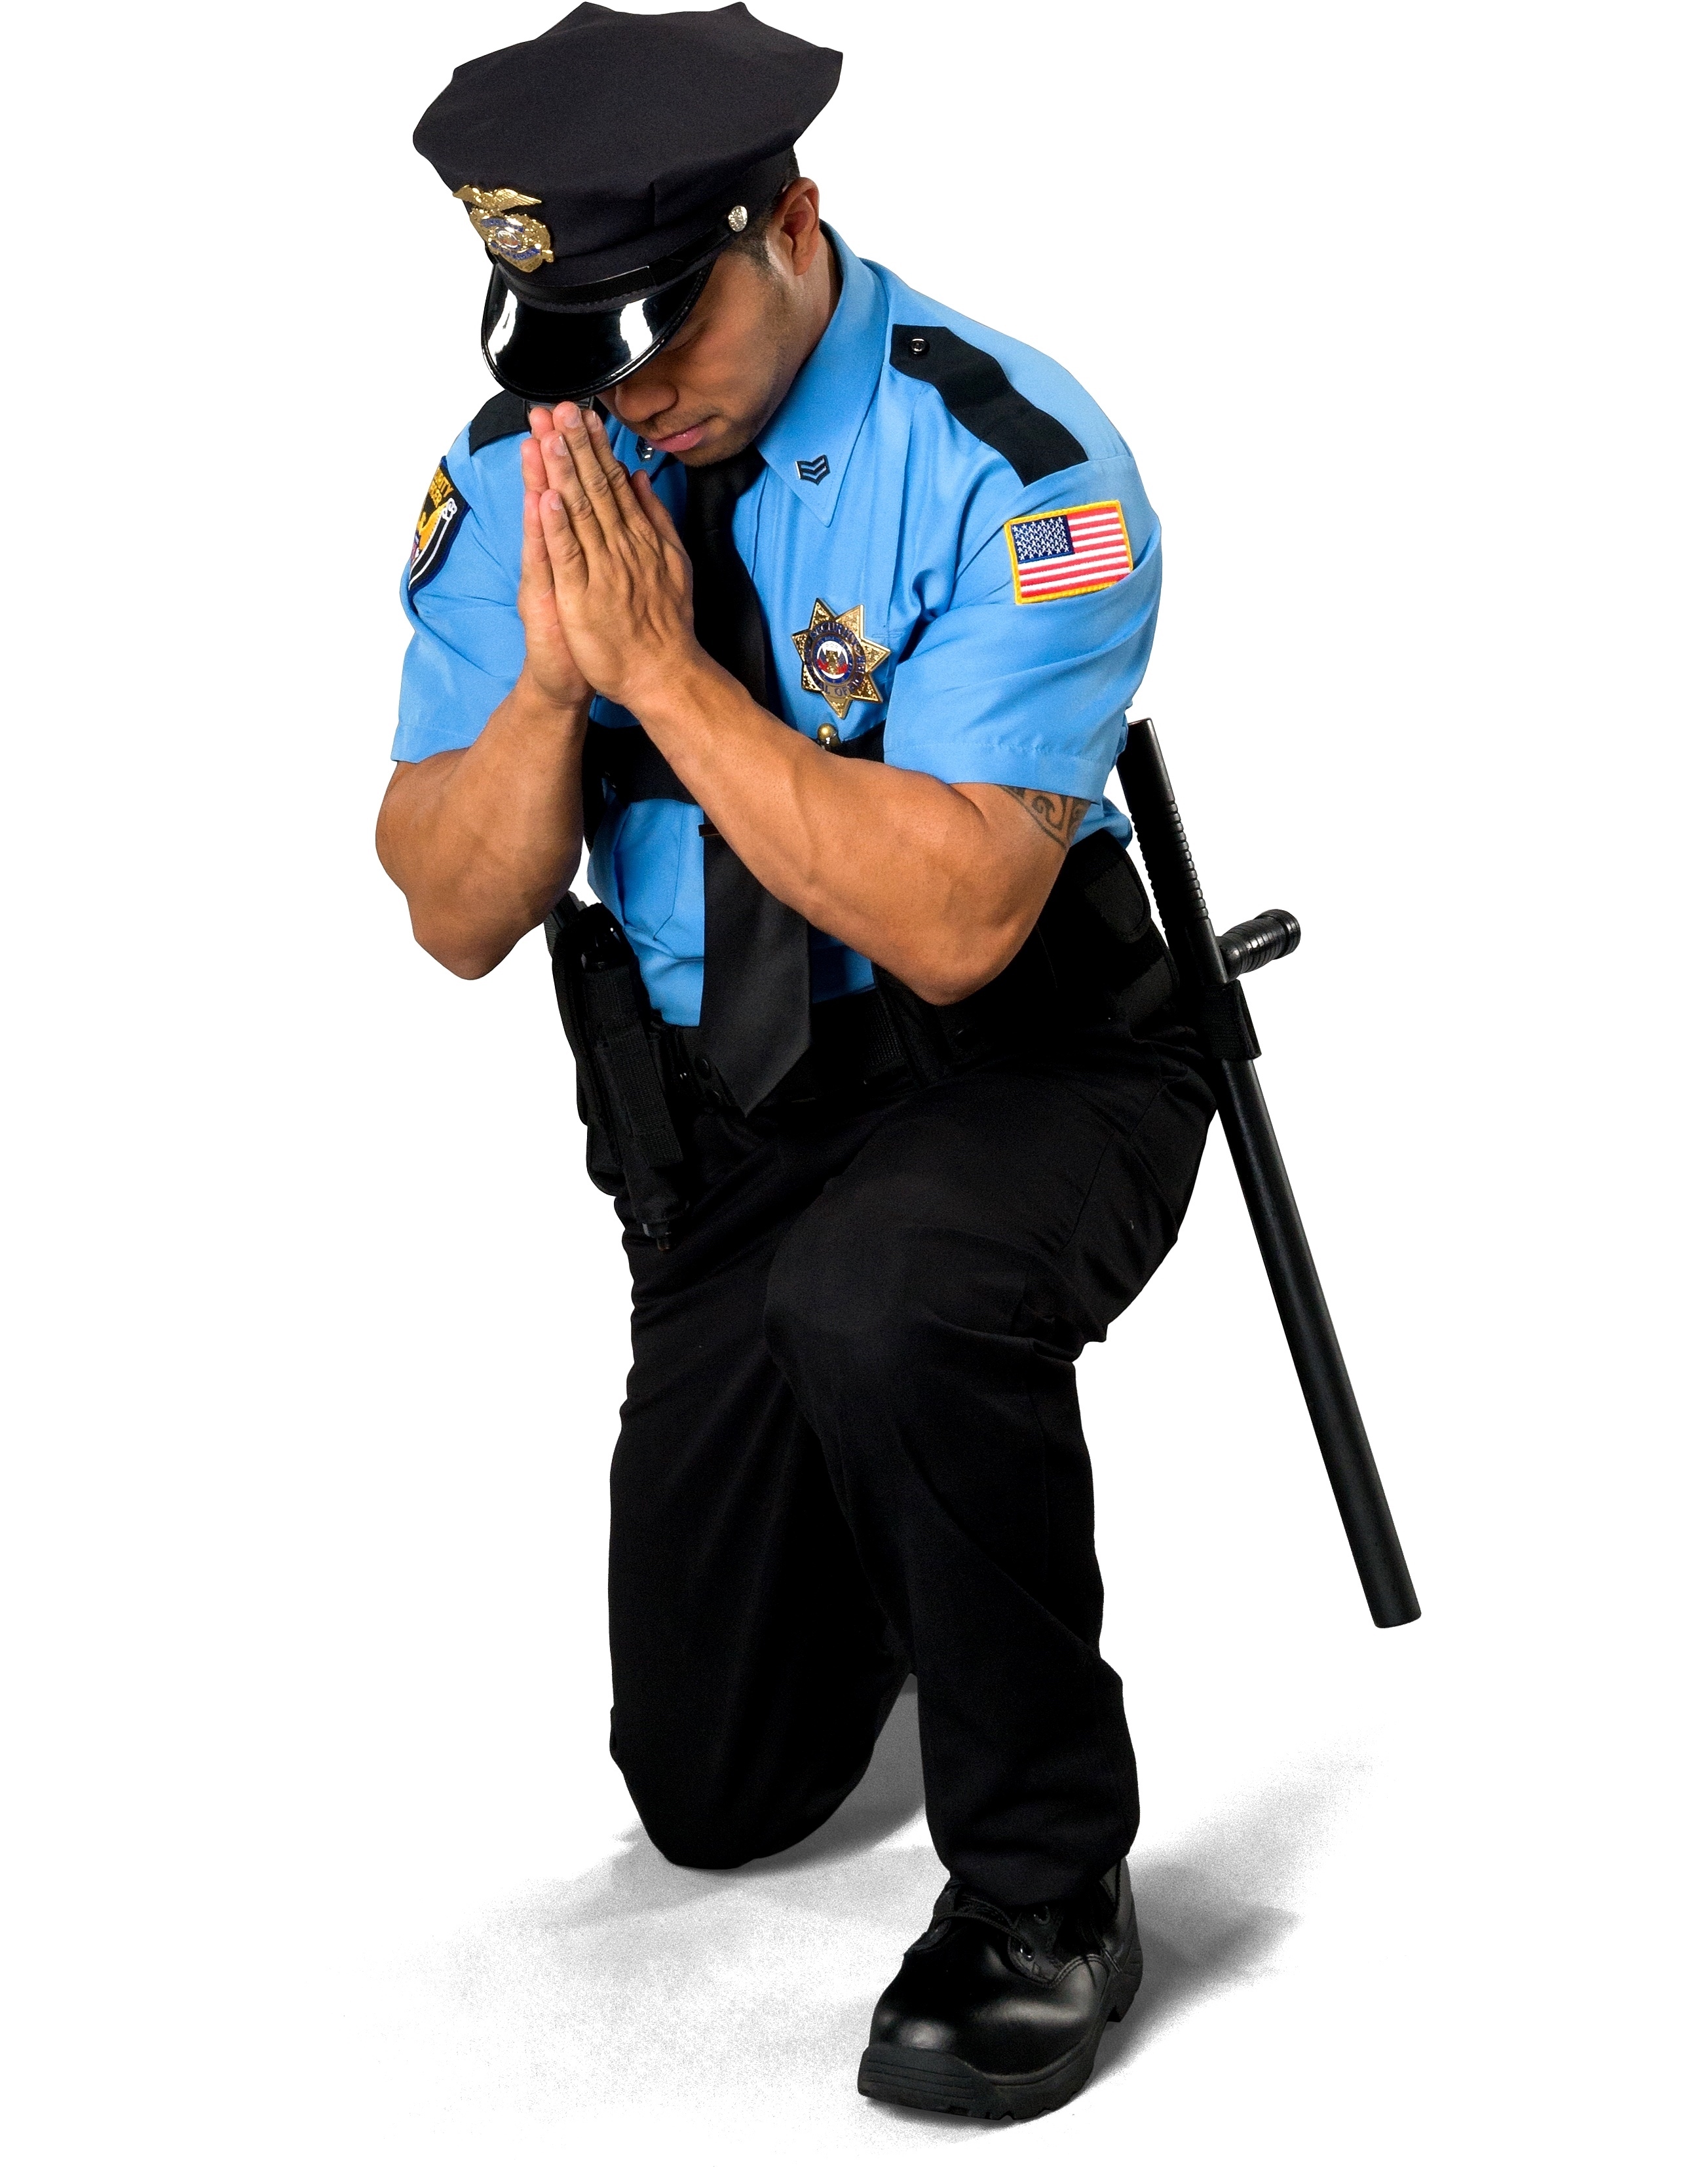 Police officer prayer